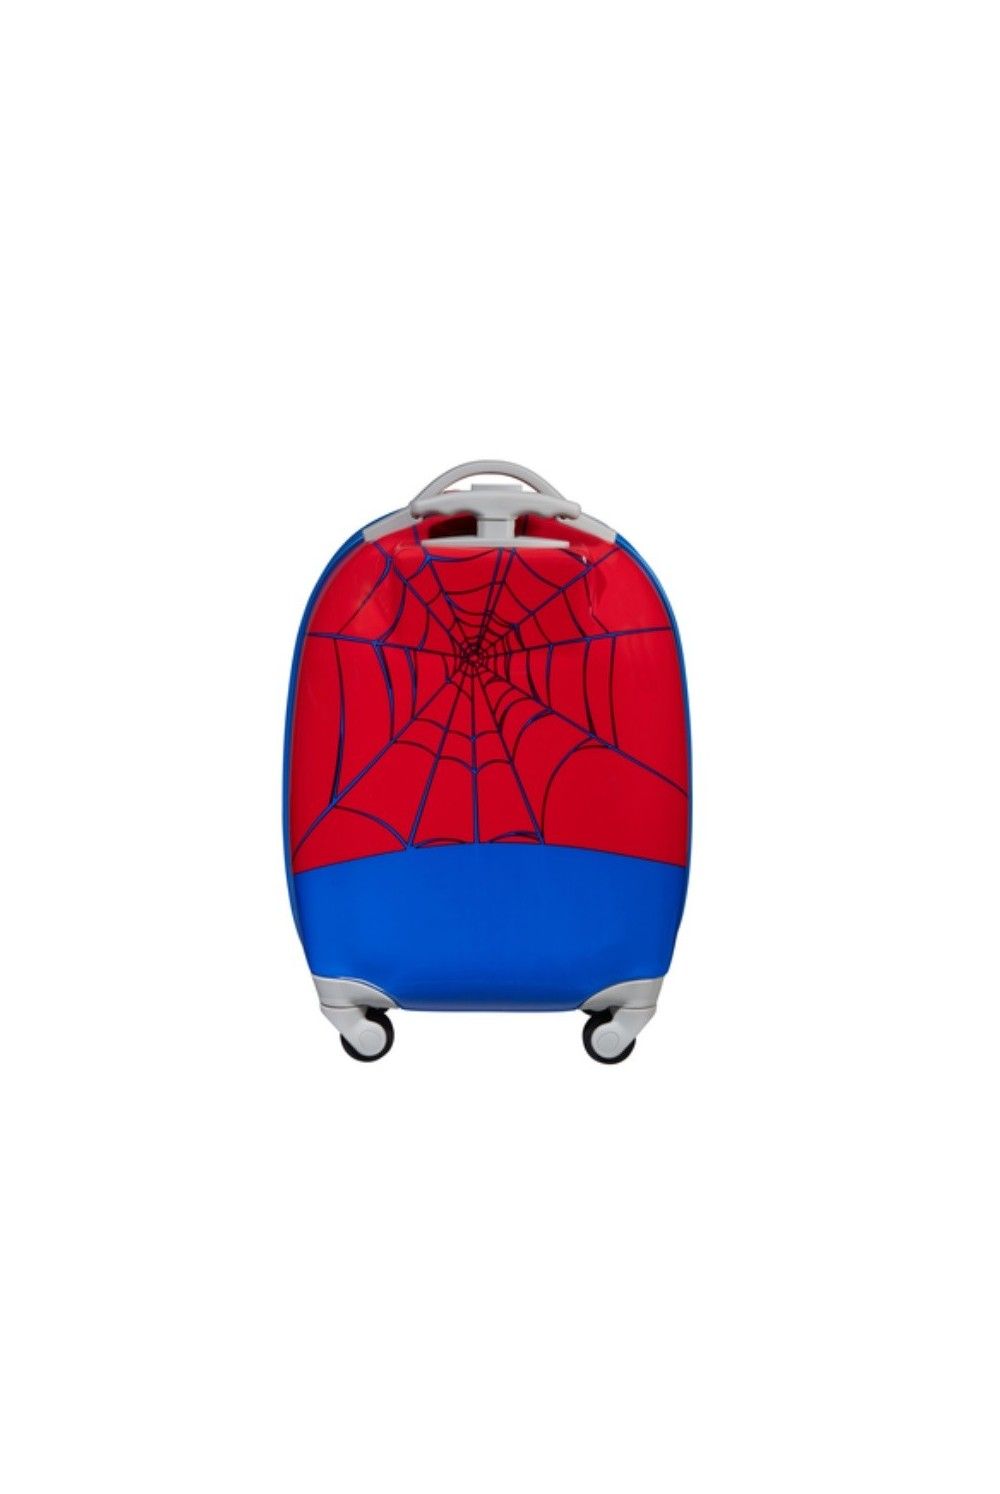 Kids suitcase by Samsonite Disney Ultimate 2.0 Marvel Spider-Man 46 cm 4 wheel